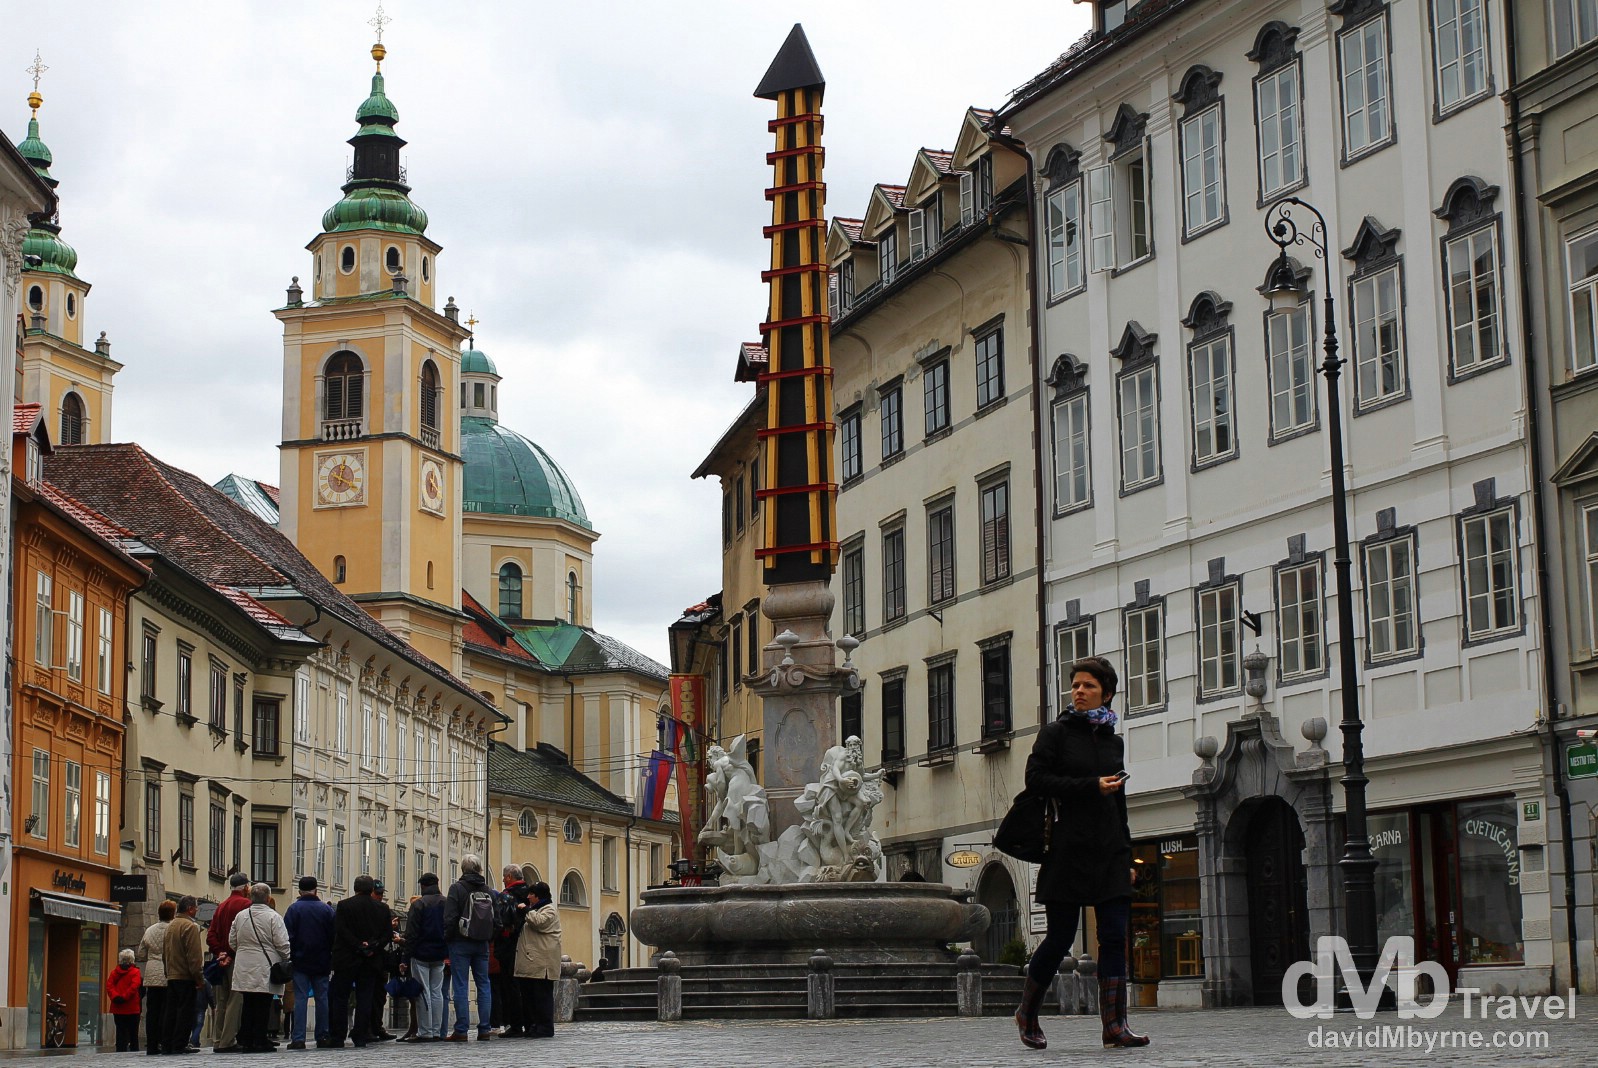 Mestni trg in the medieval Old Town part of Ljubljana, Slovenia. March 23rd, 2014.